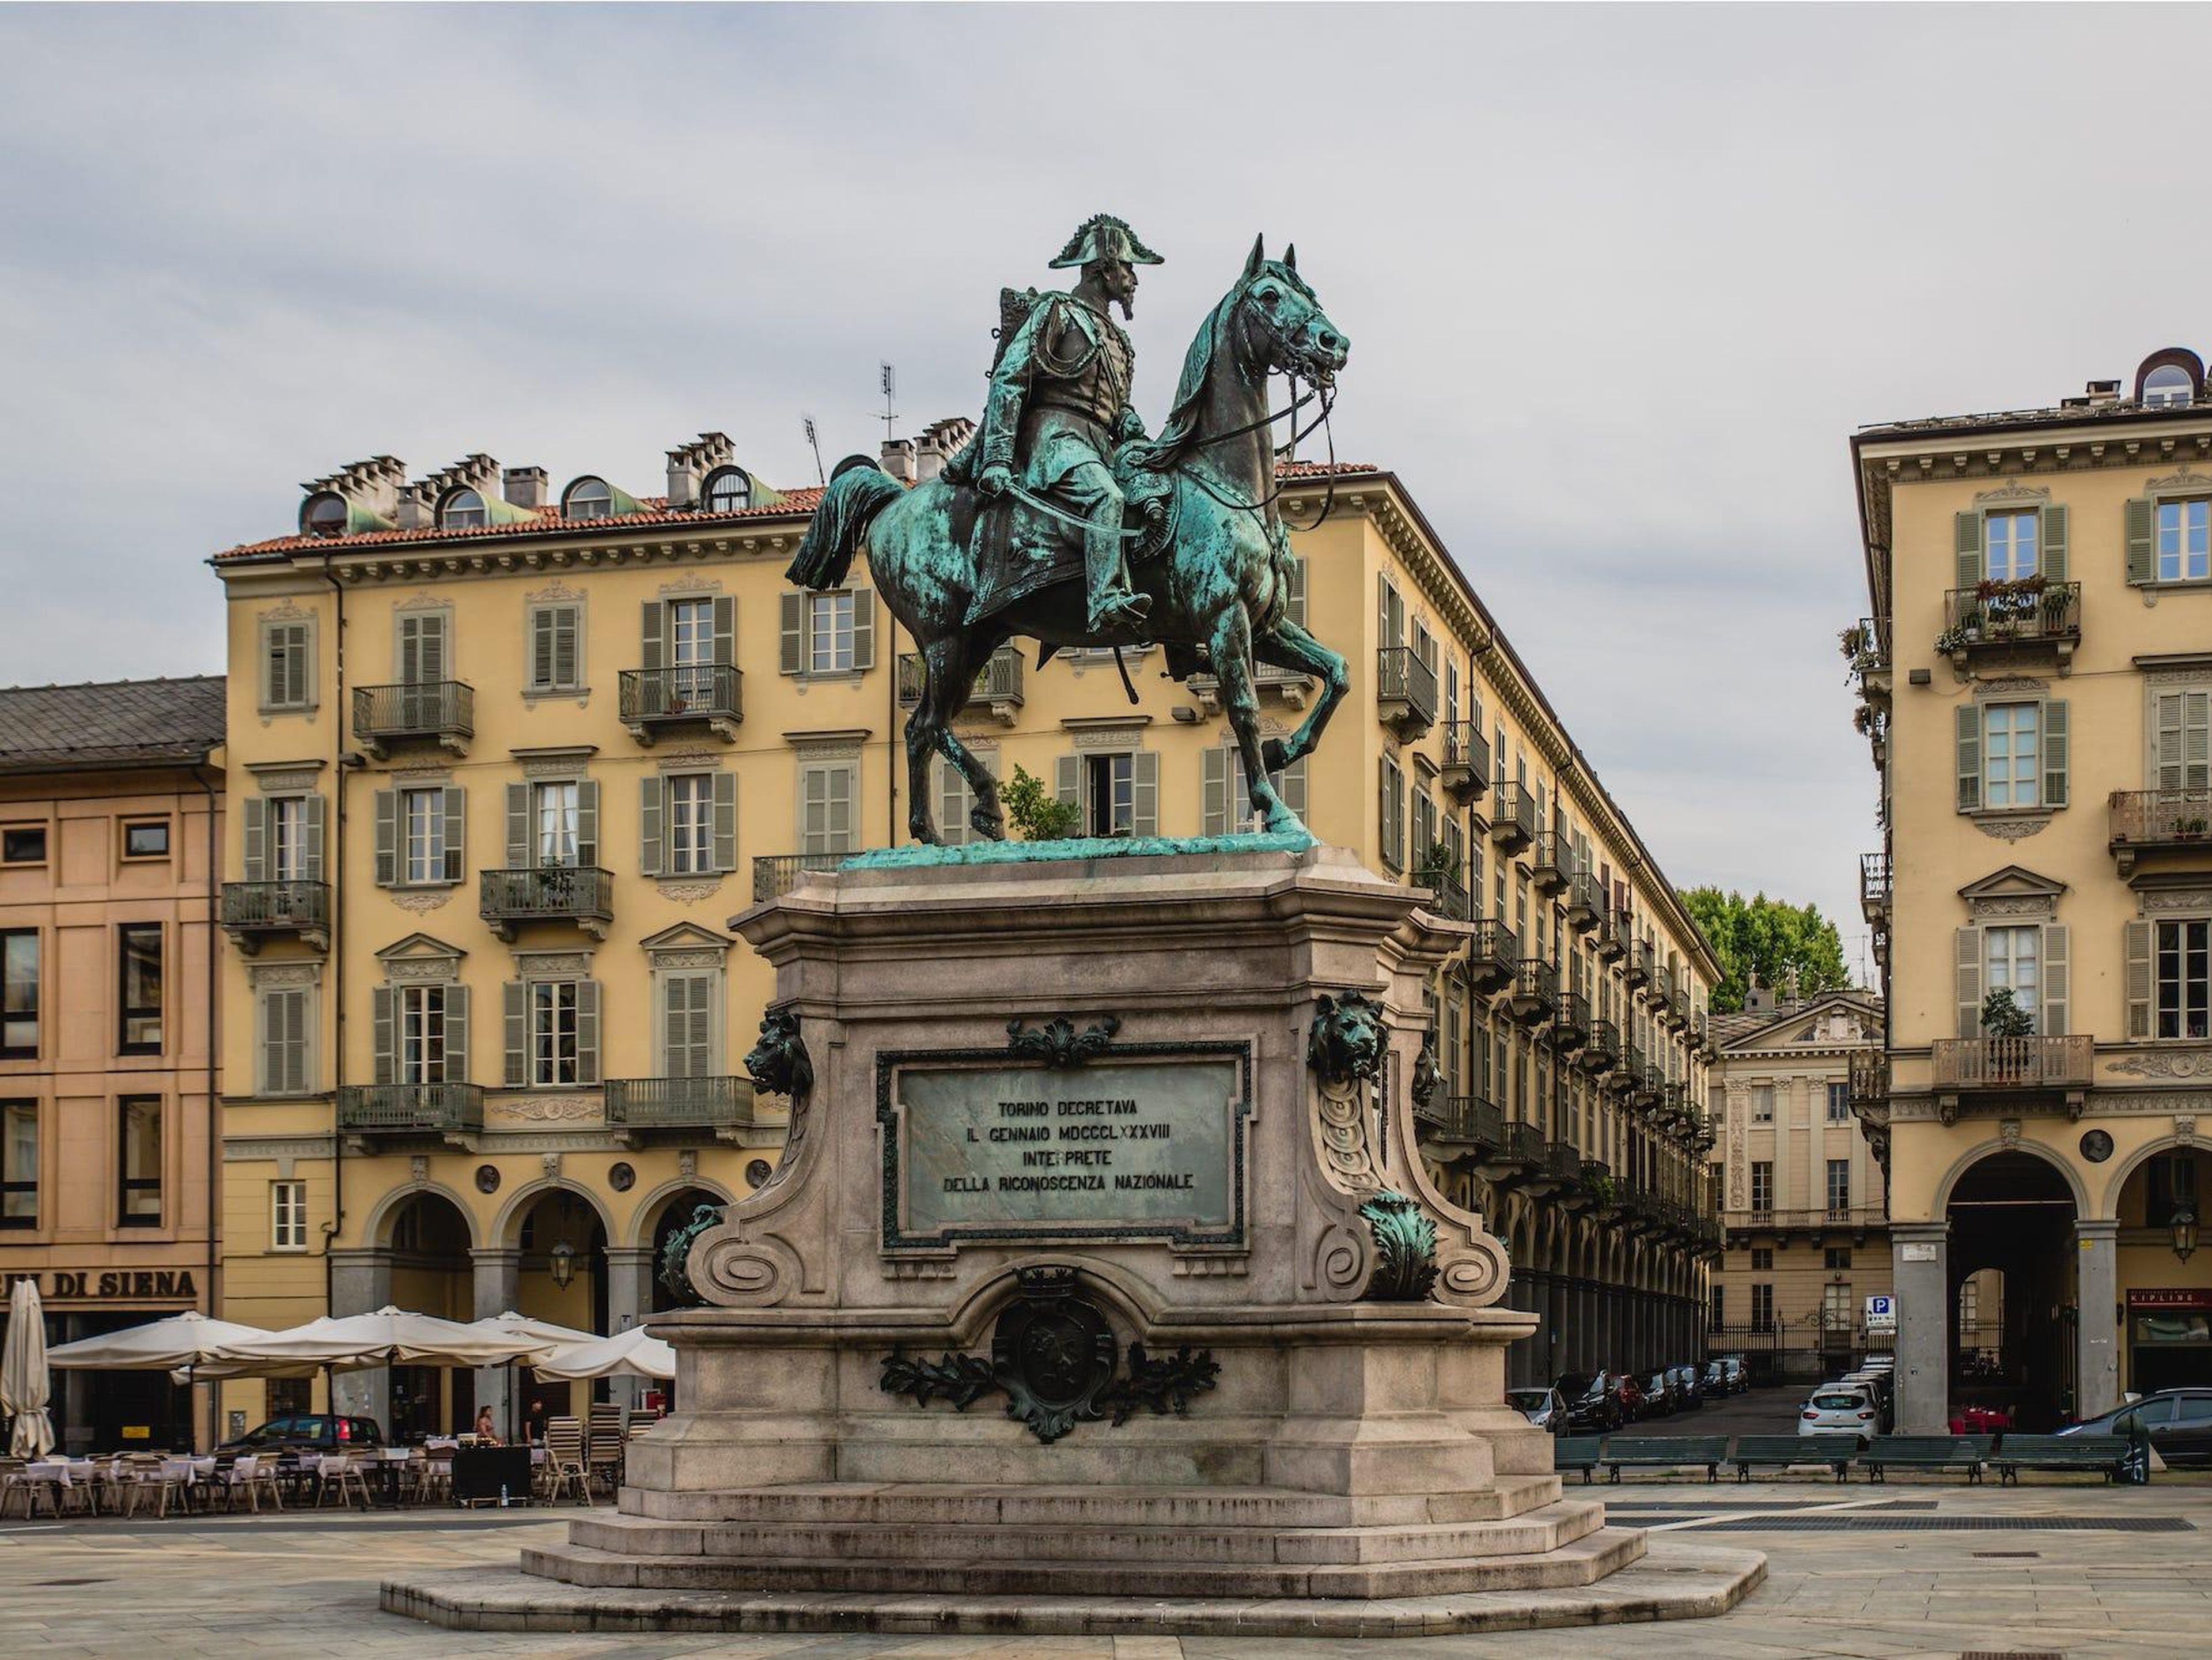 La estatua del General Alfonso Ferrero della Marmora en Turín, Italia.